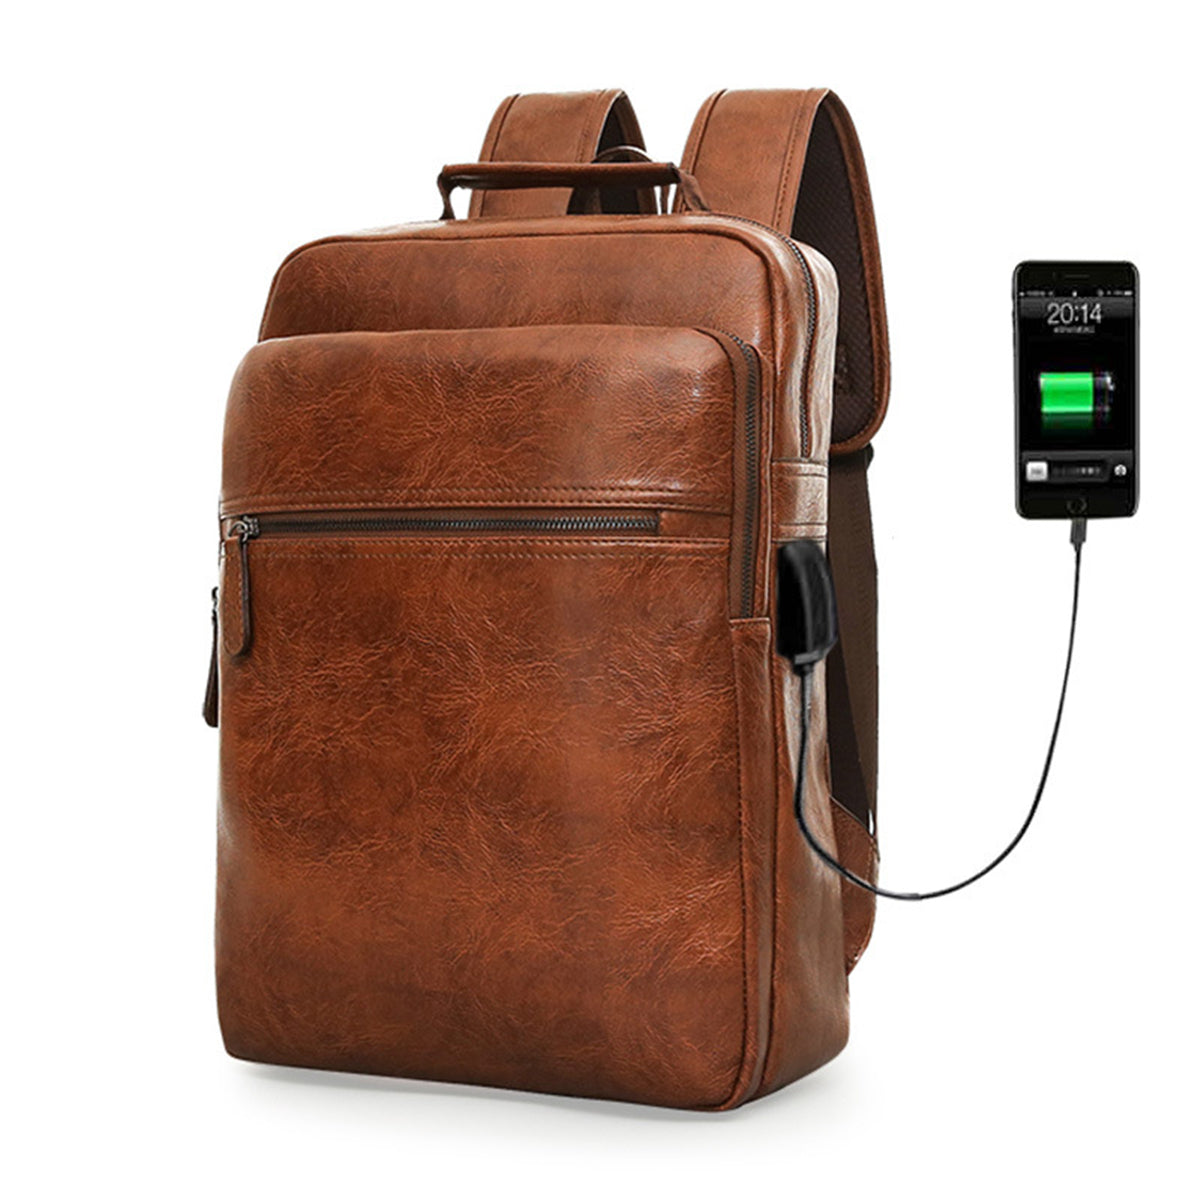 13L Outdoor Business Travel USB Laptop Backpack Waterproof PU Leather Shoulder Bag